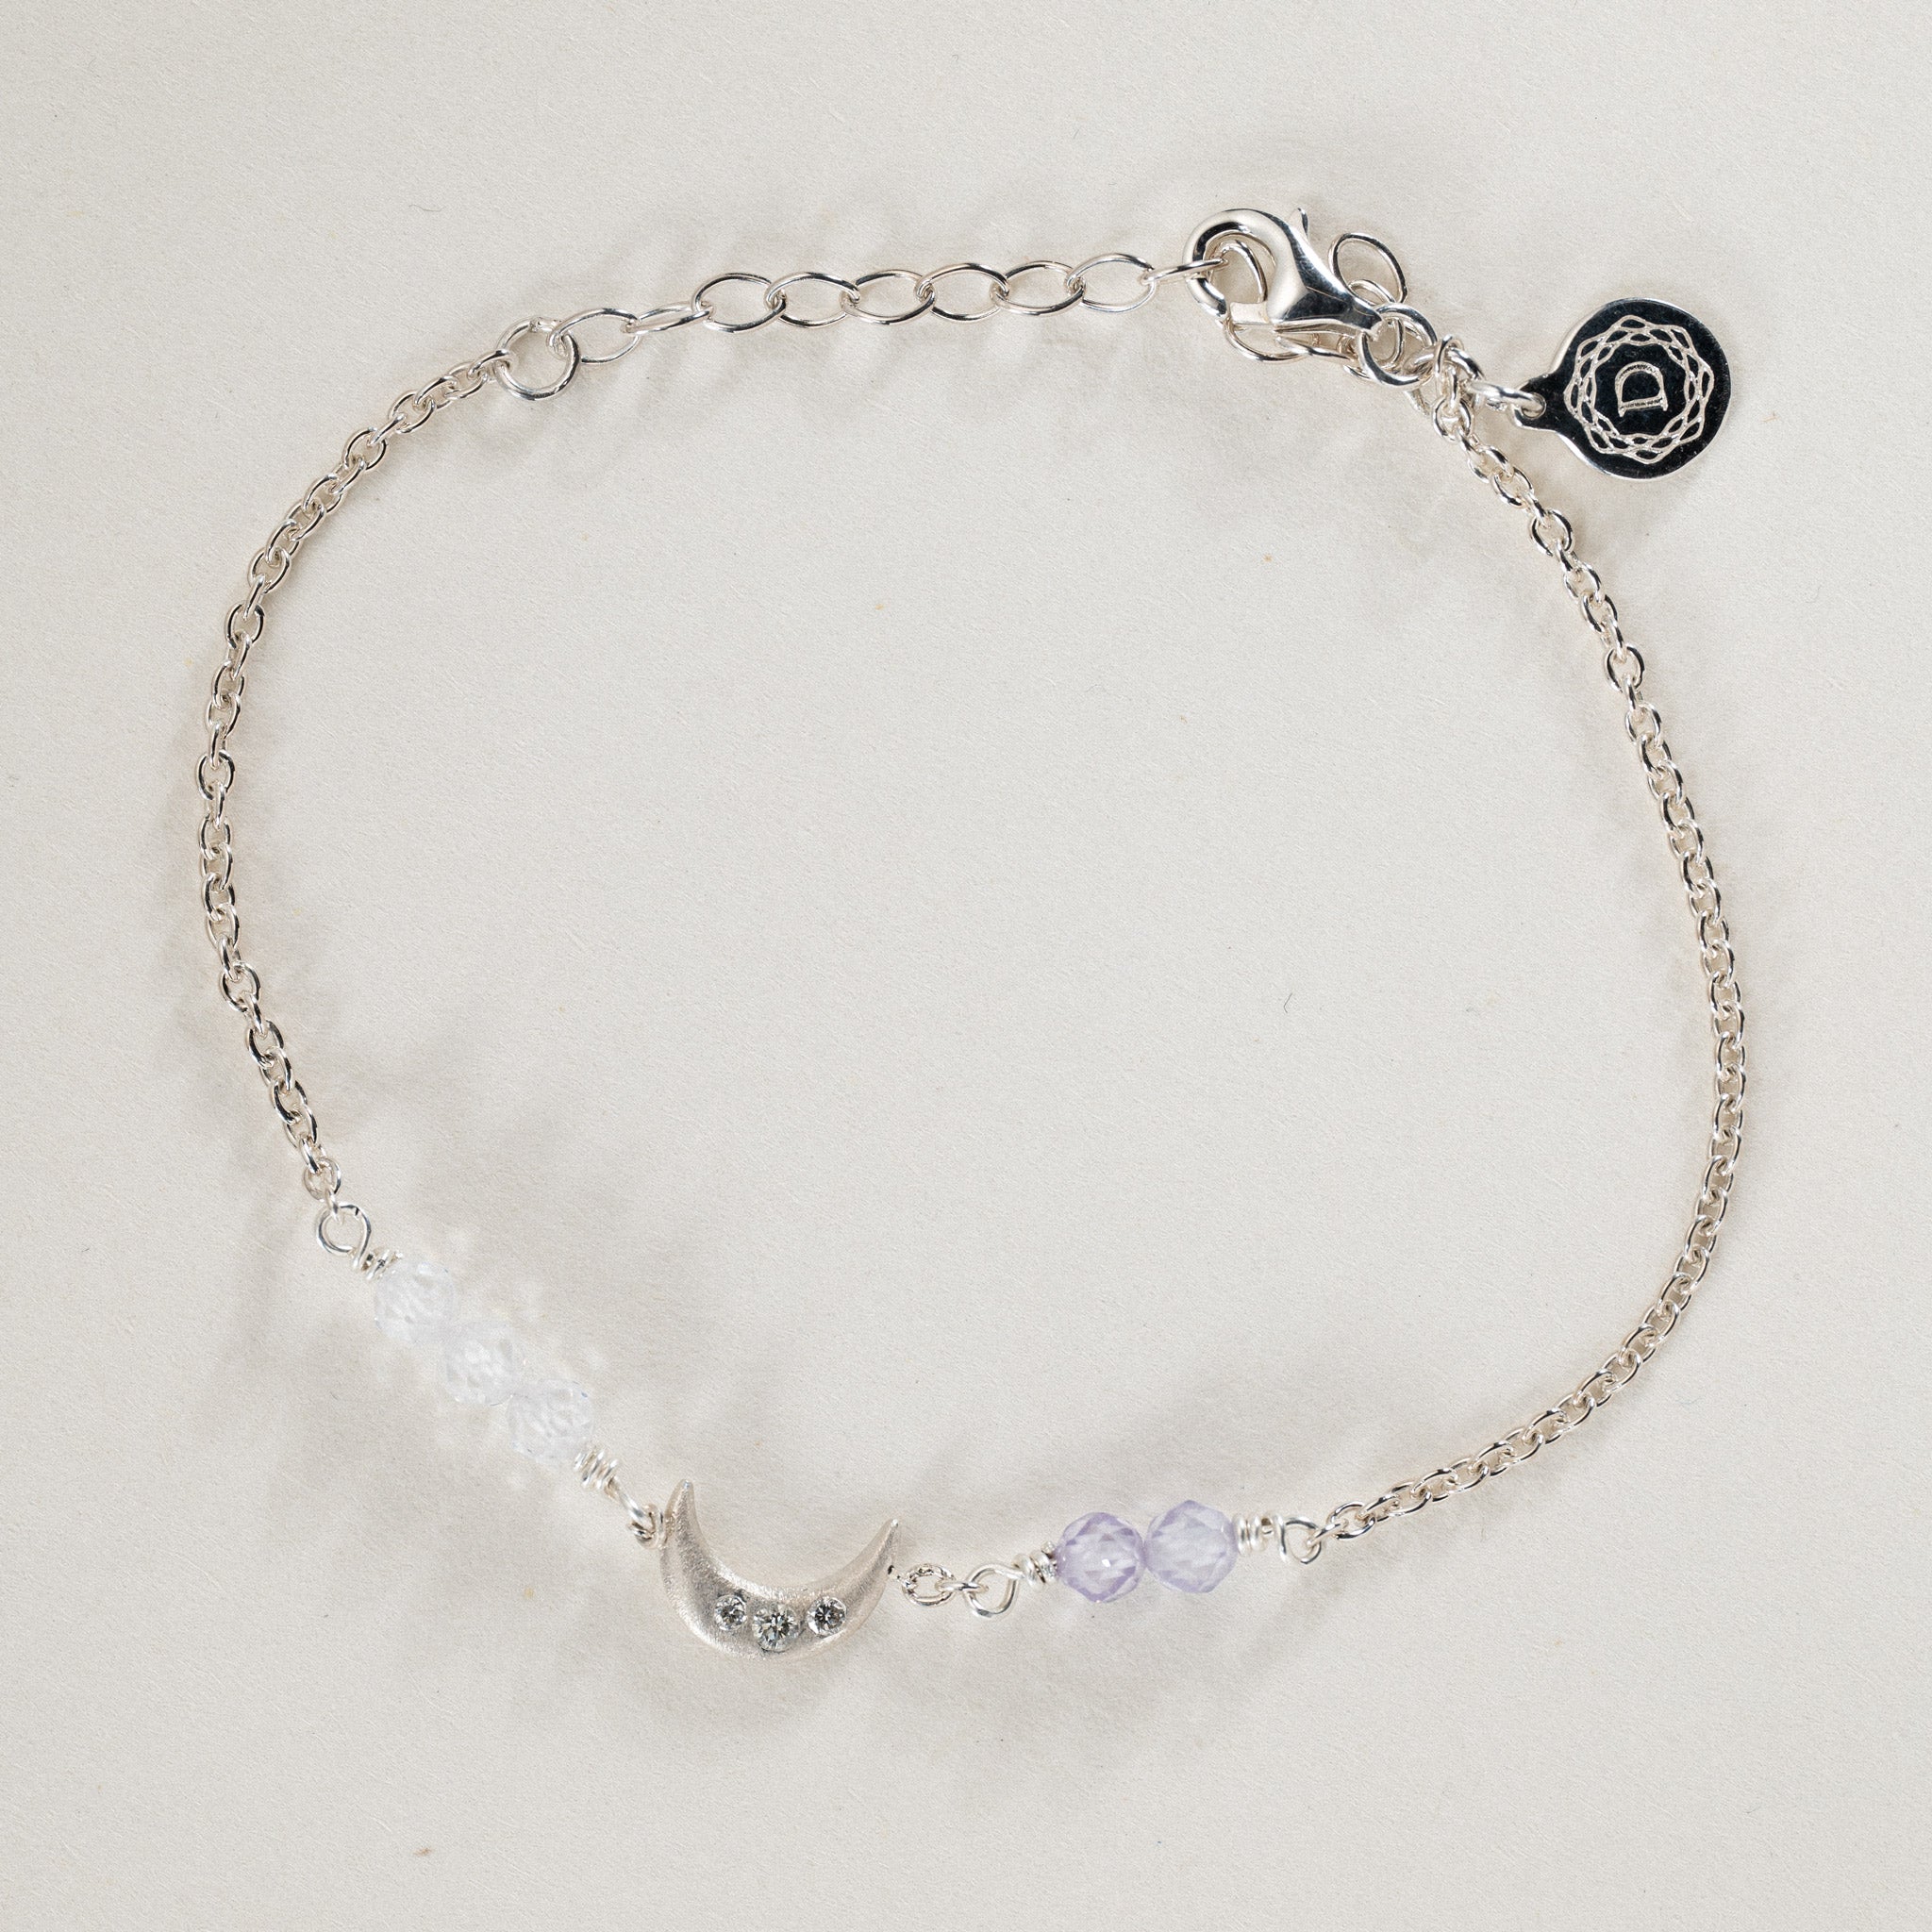 No. 07 - 0.04ct Grown Diamond Moon Bracelet in silver with. semi-precious stones